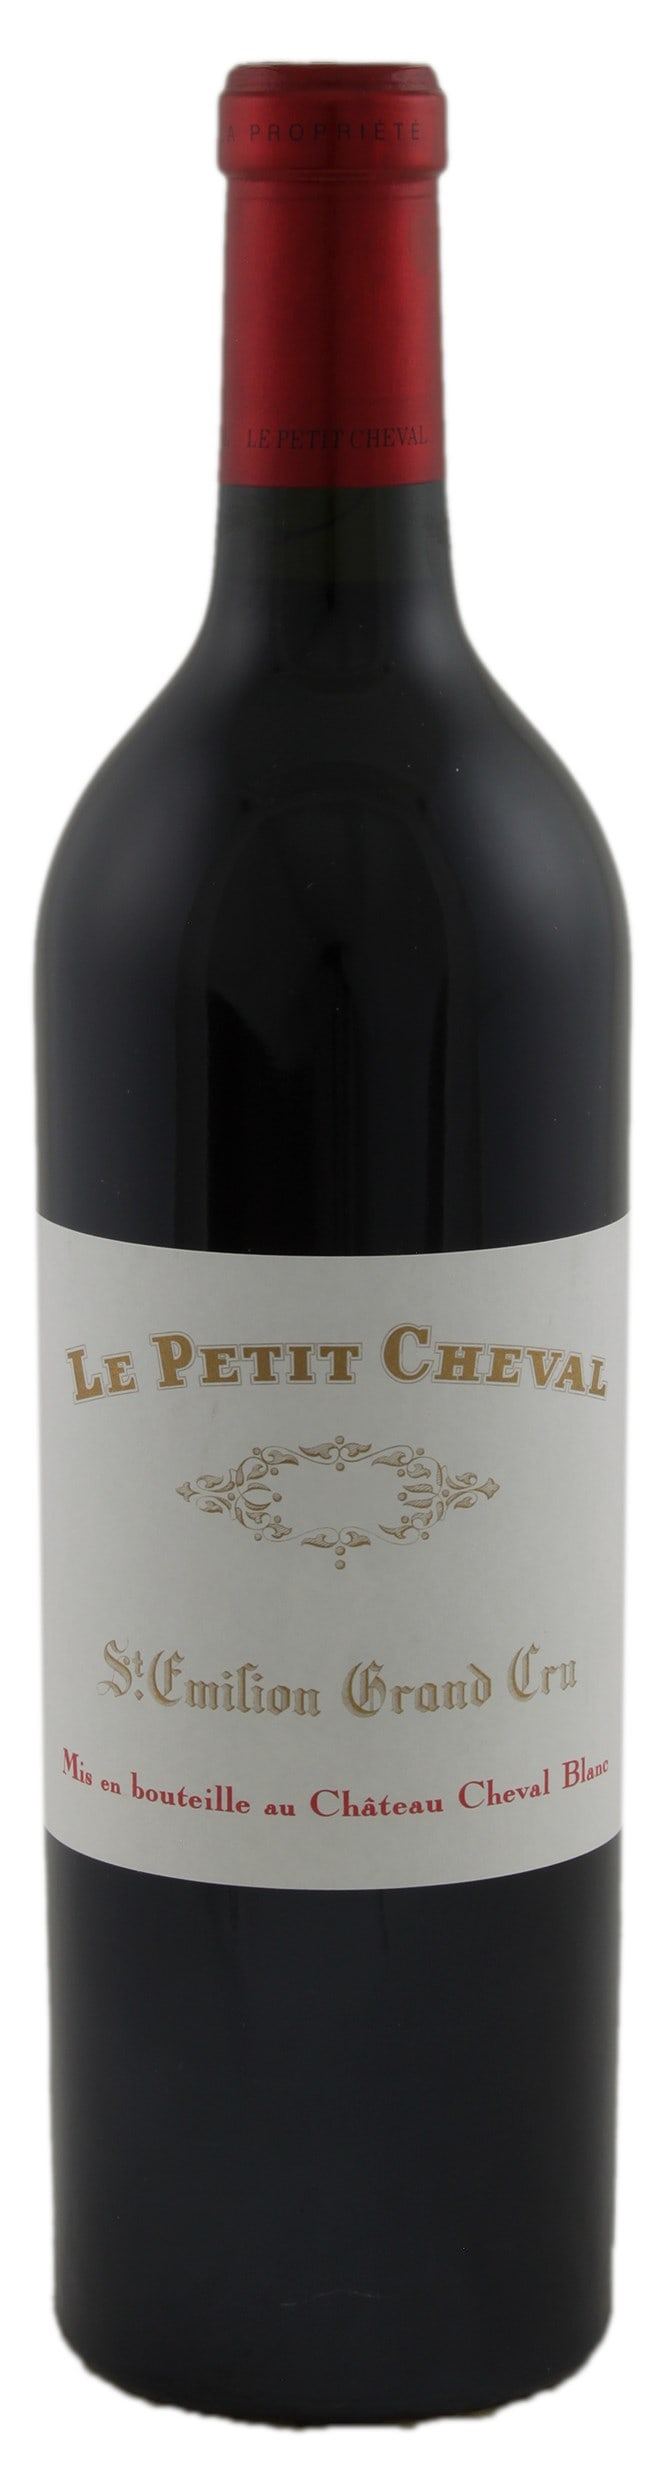 Chateau Cheval Blanc - Le Petit Cheval 2010 (750)